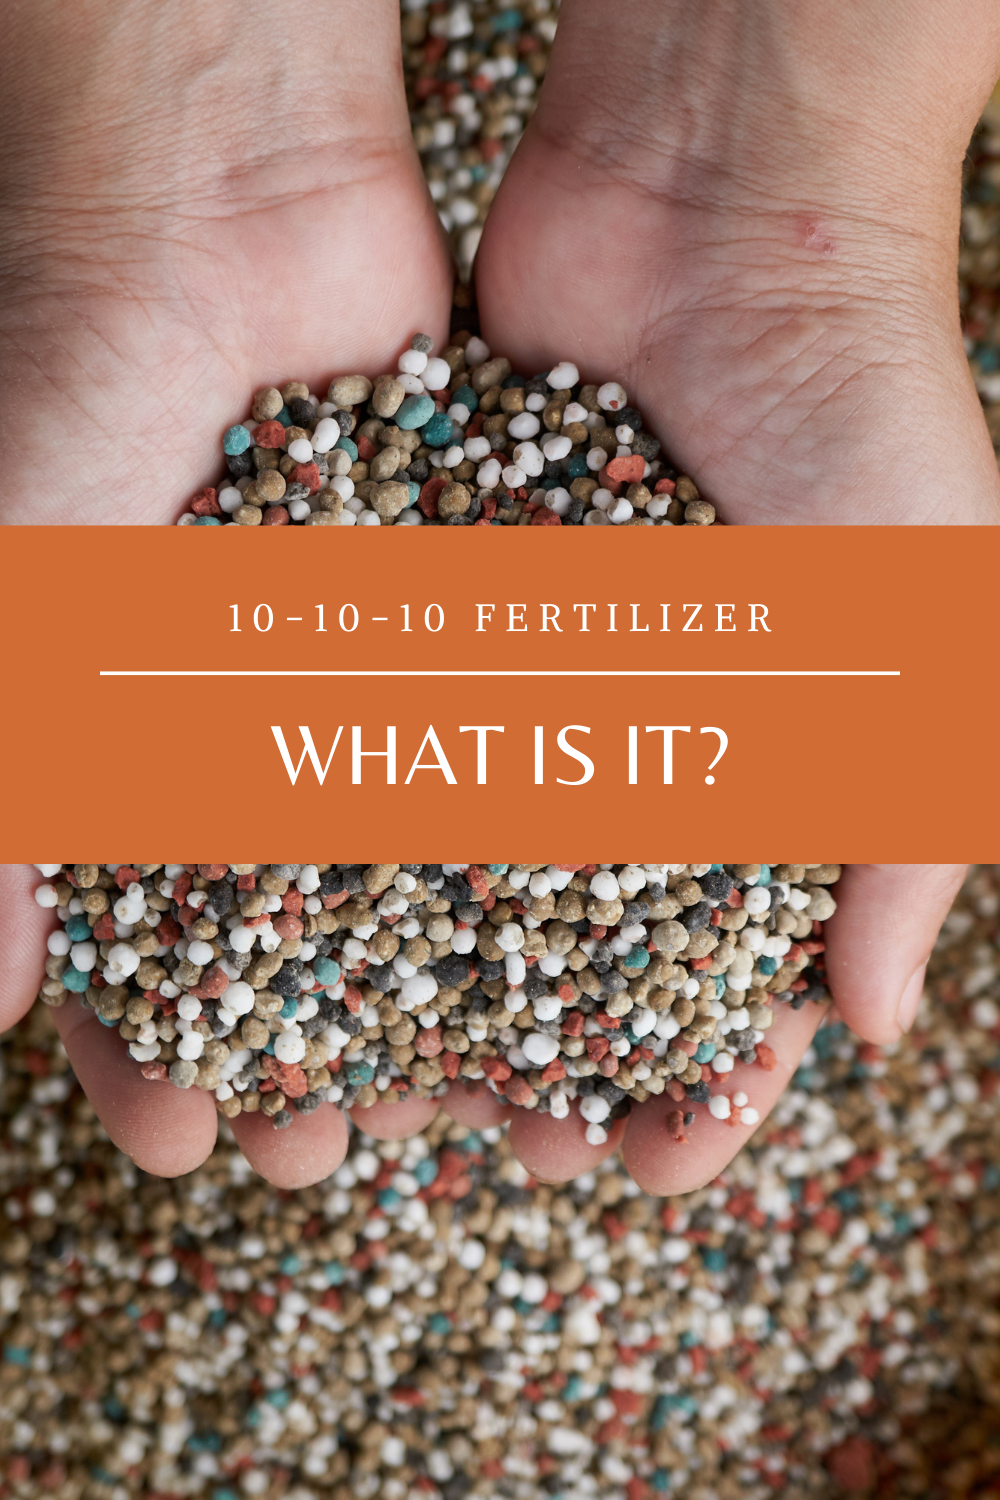 10-10-10 Fertilizer